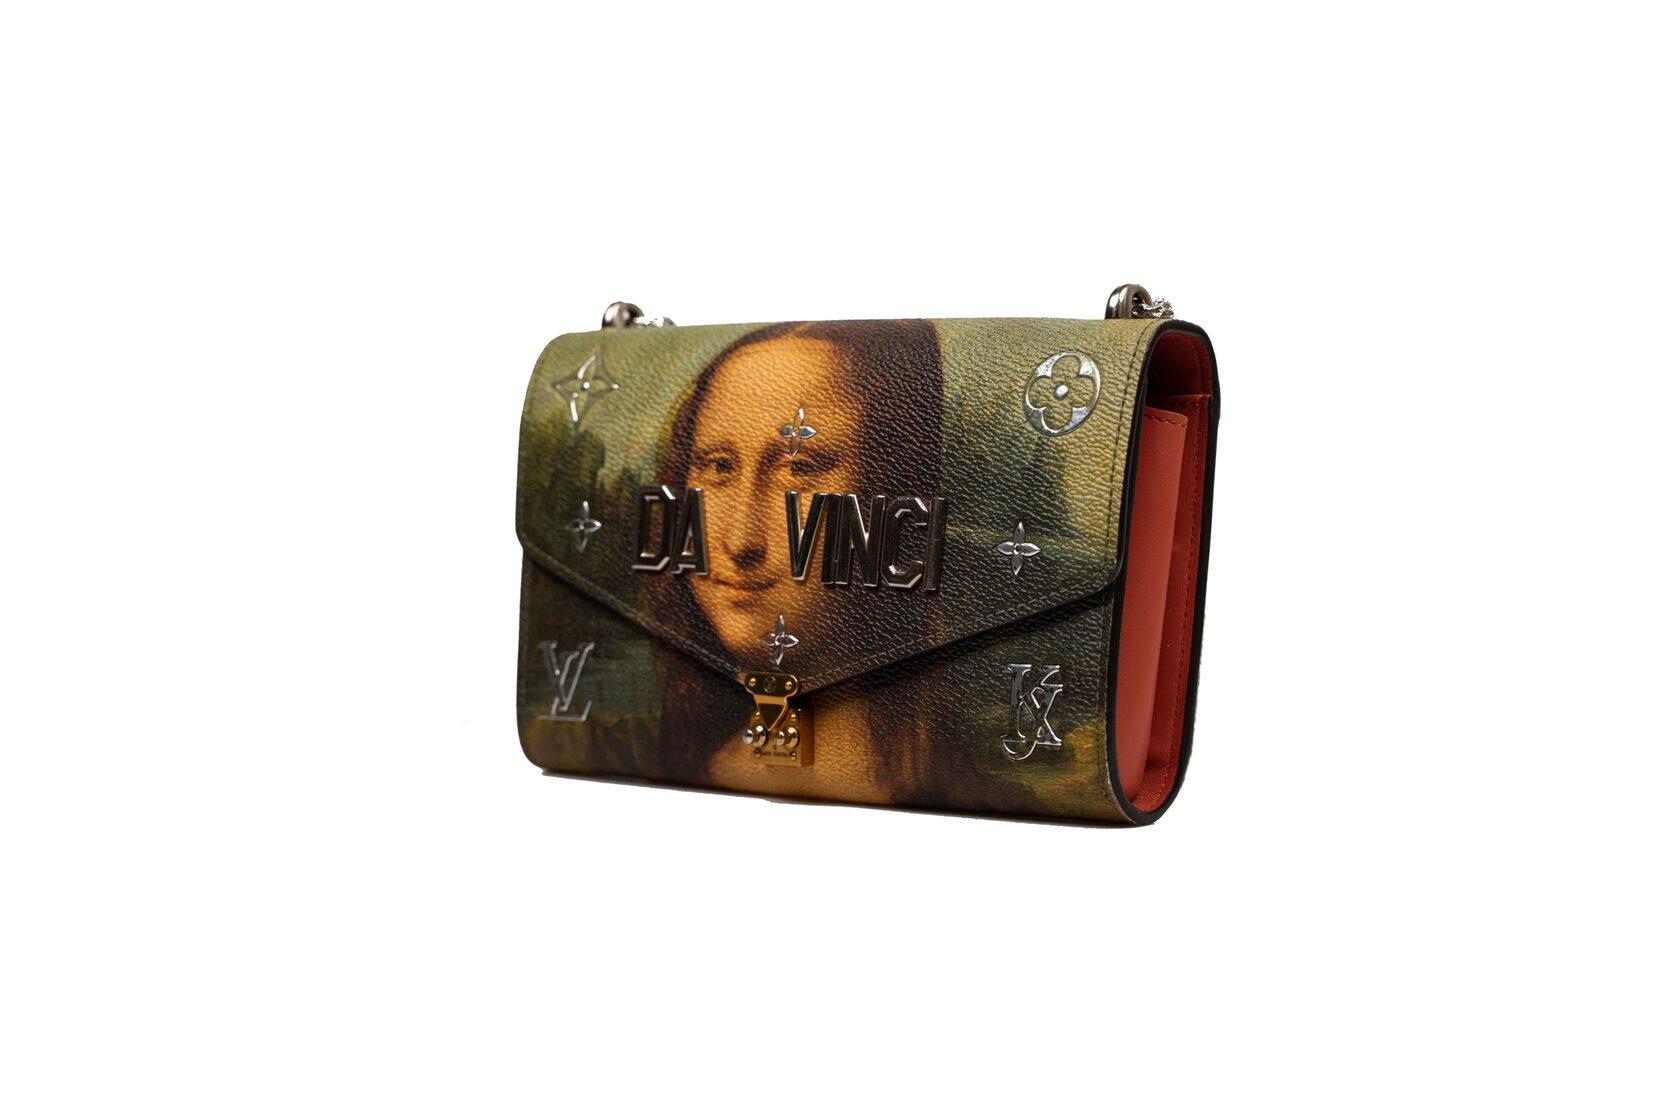 Louis Vuitton Chain Bag Limited Edition with designer Jeff Coons - Da Vinci For Sale 1